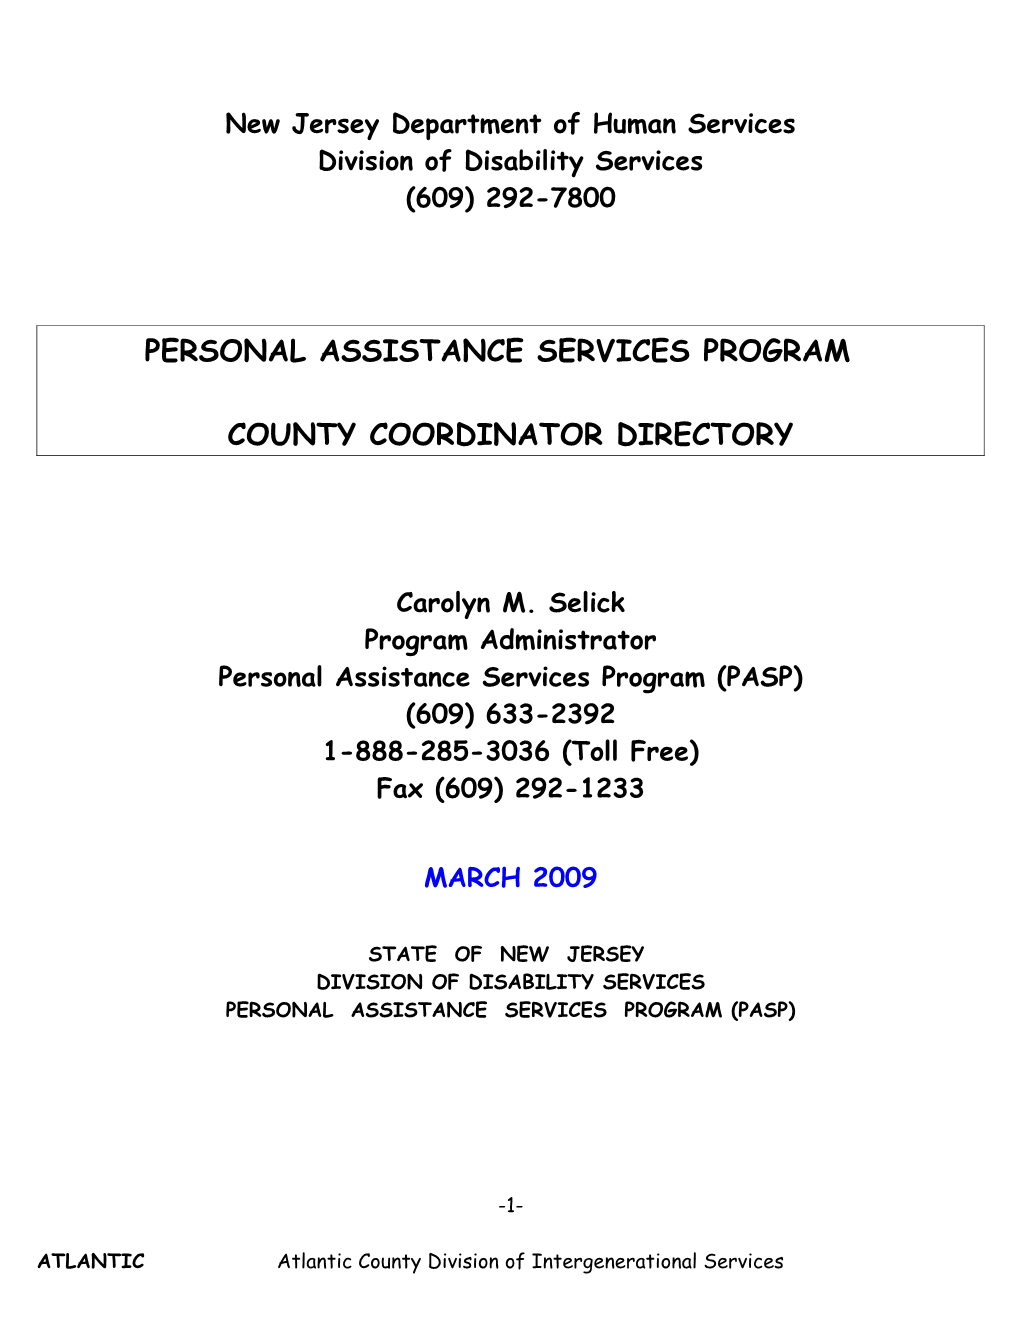 Personal Assistance Services Program s1